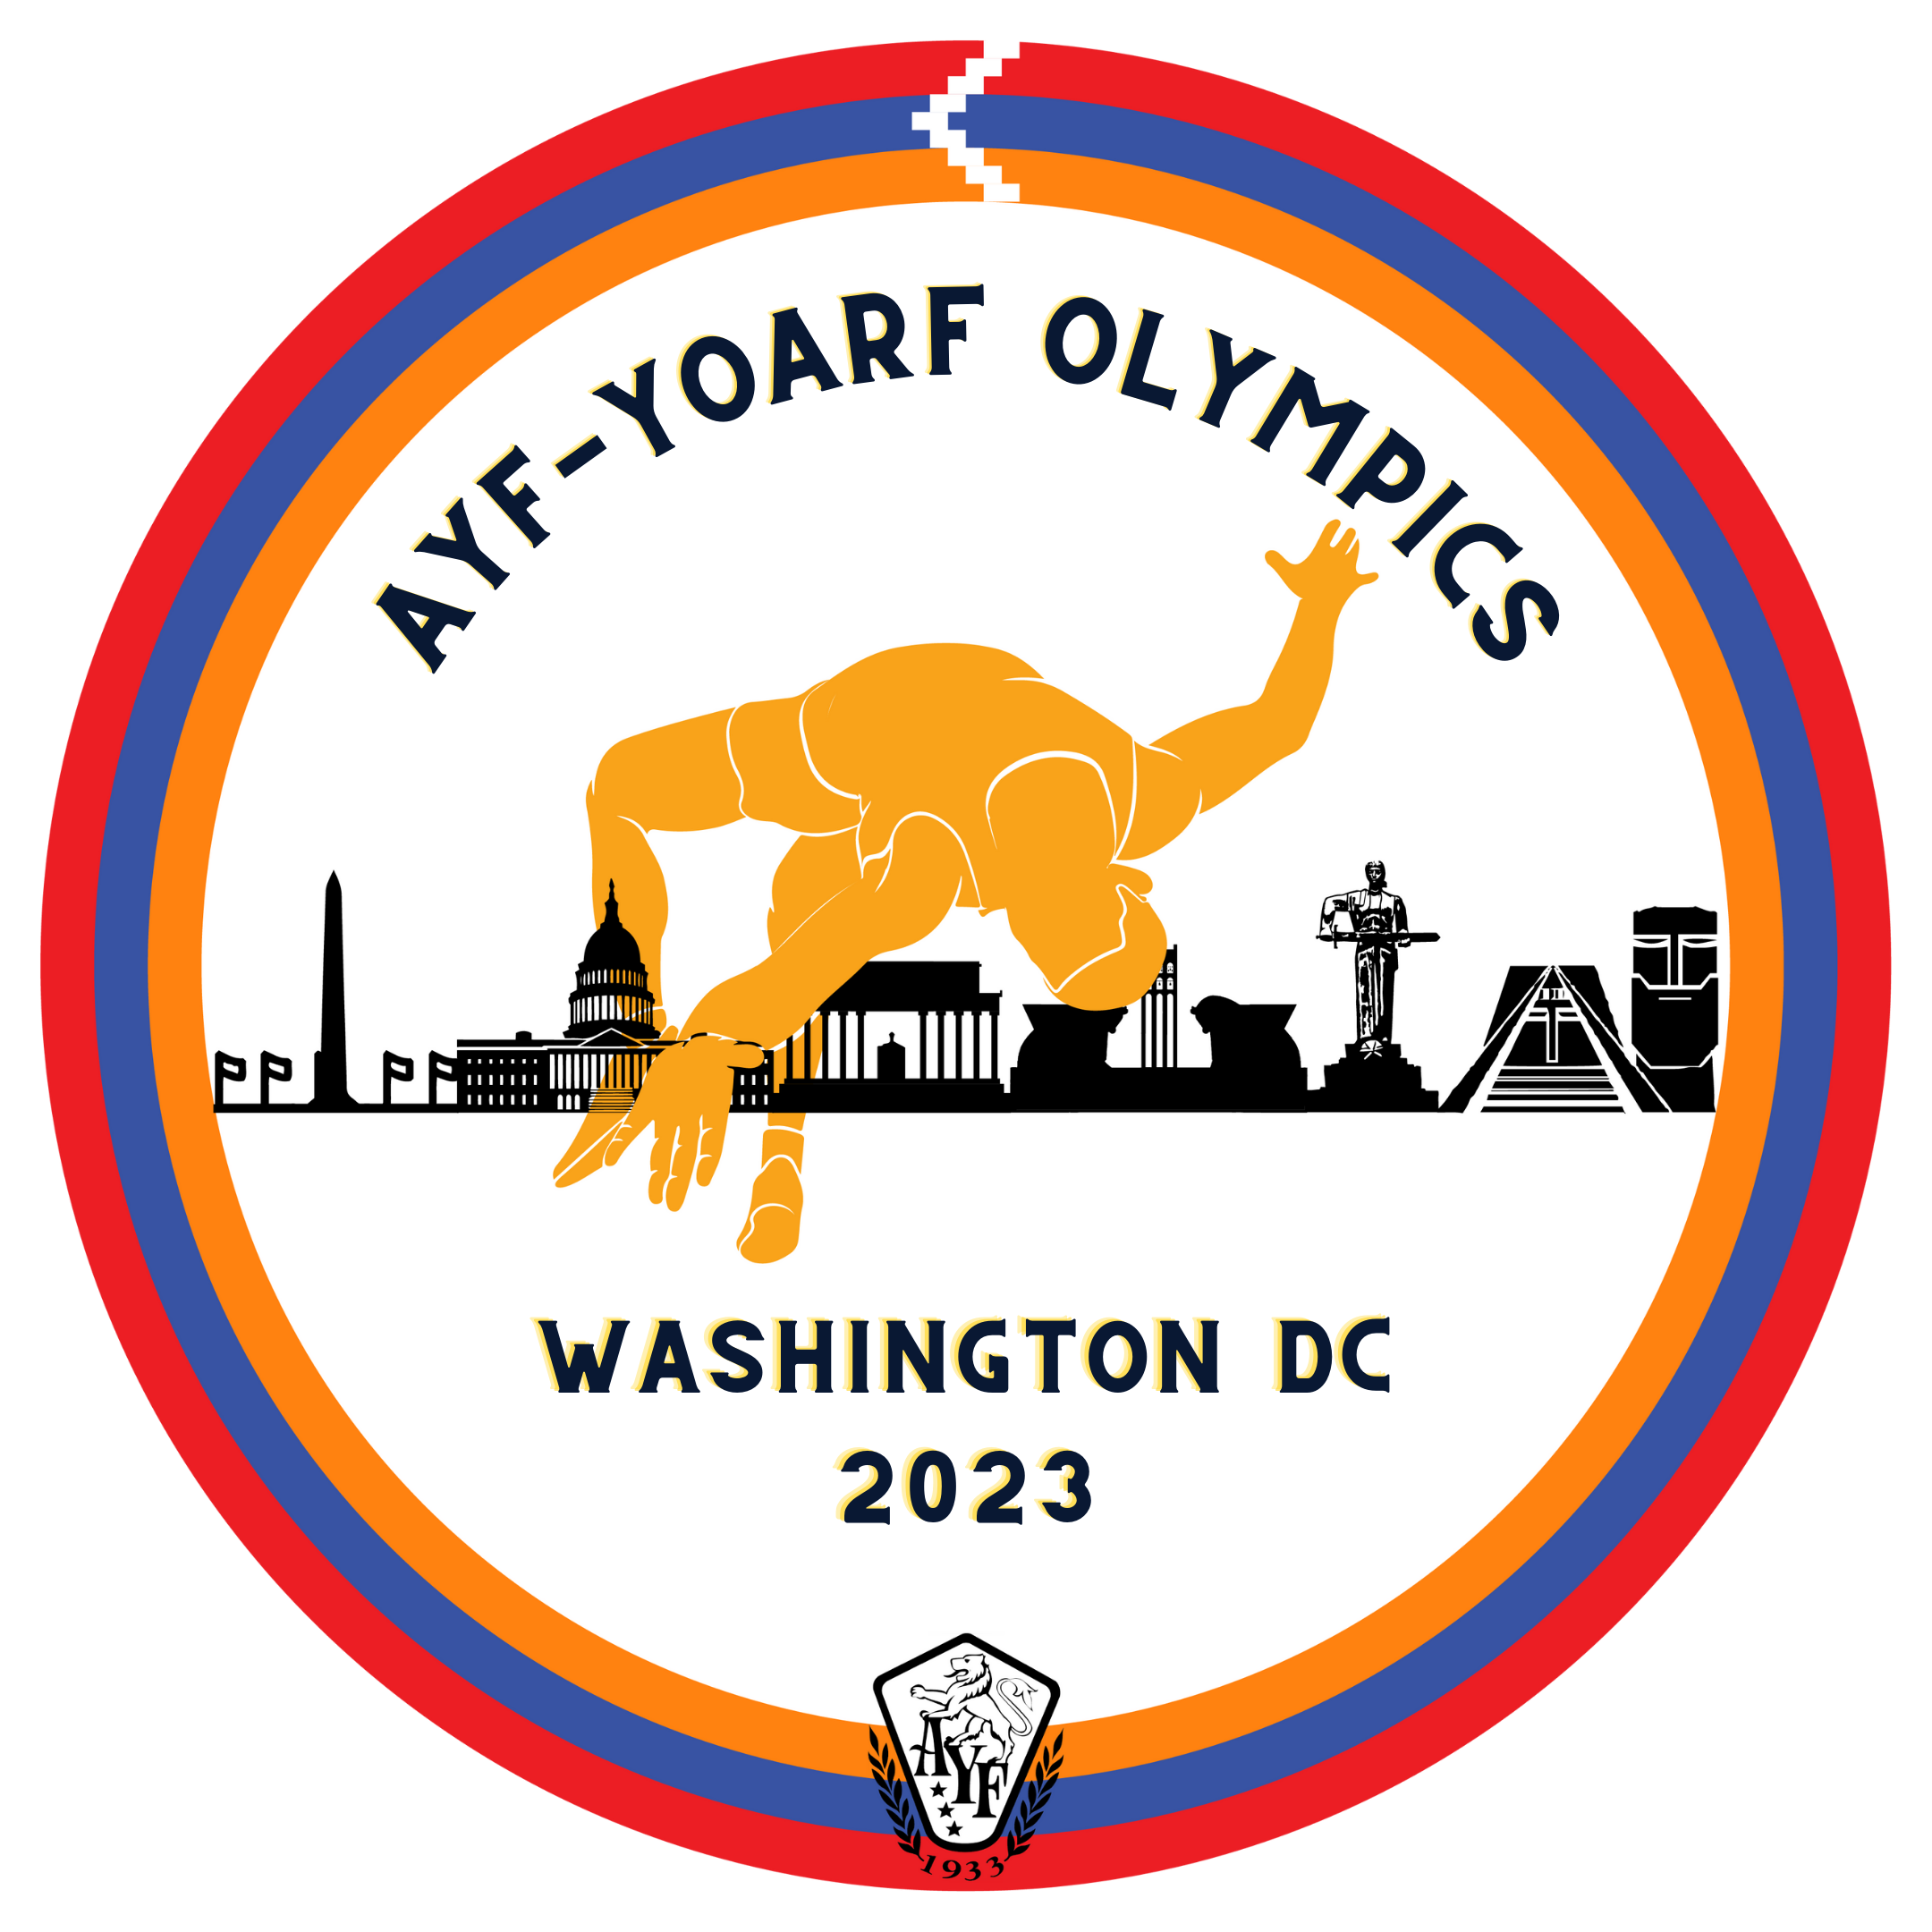 AYF-YOARF Olympic Games | Detroit 2024